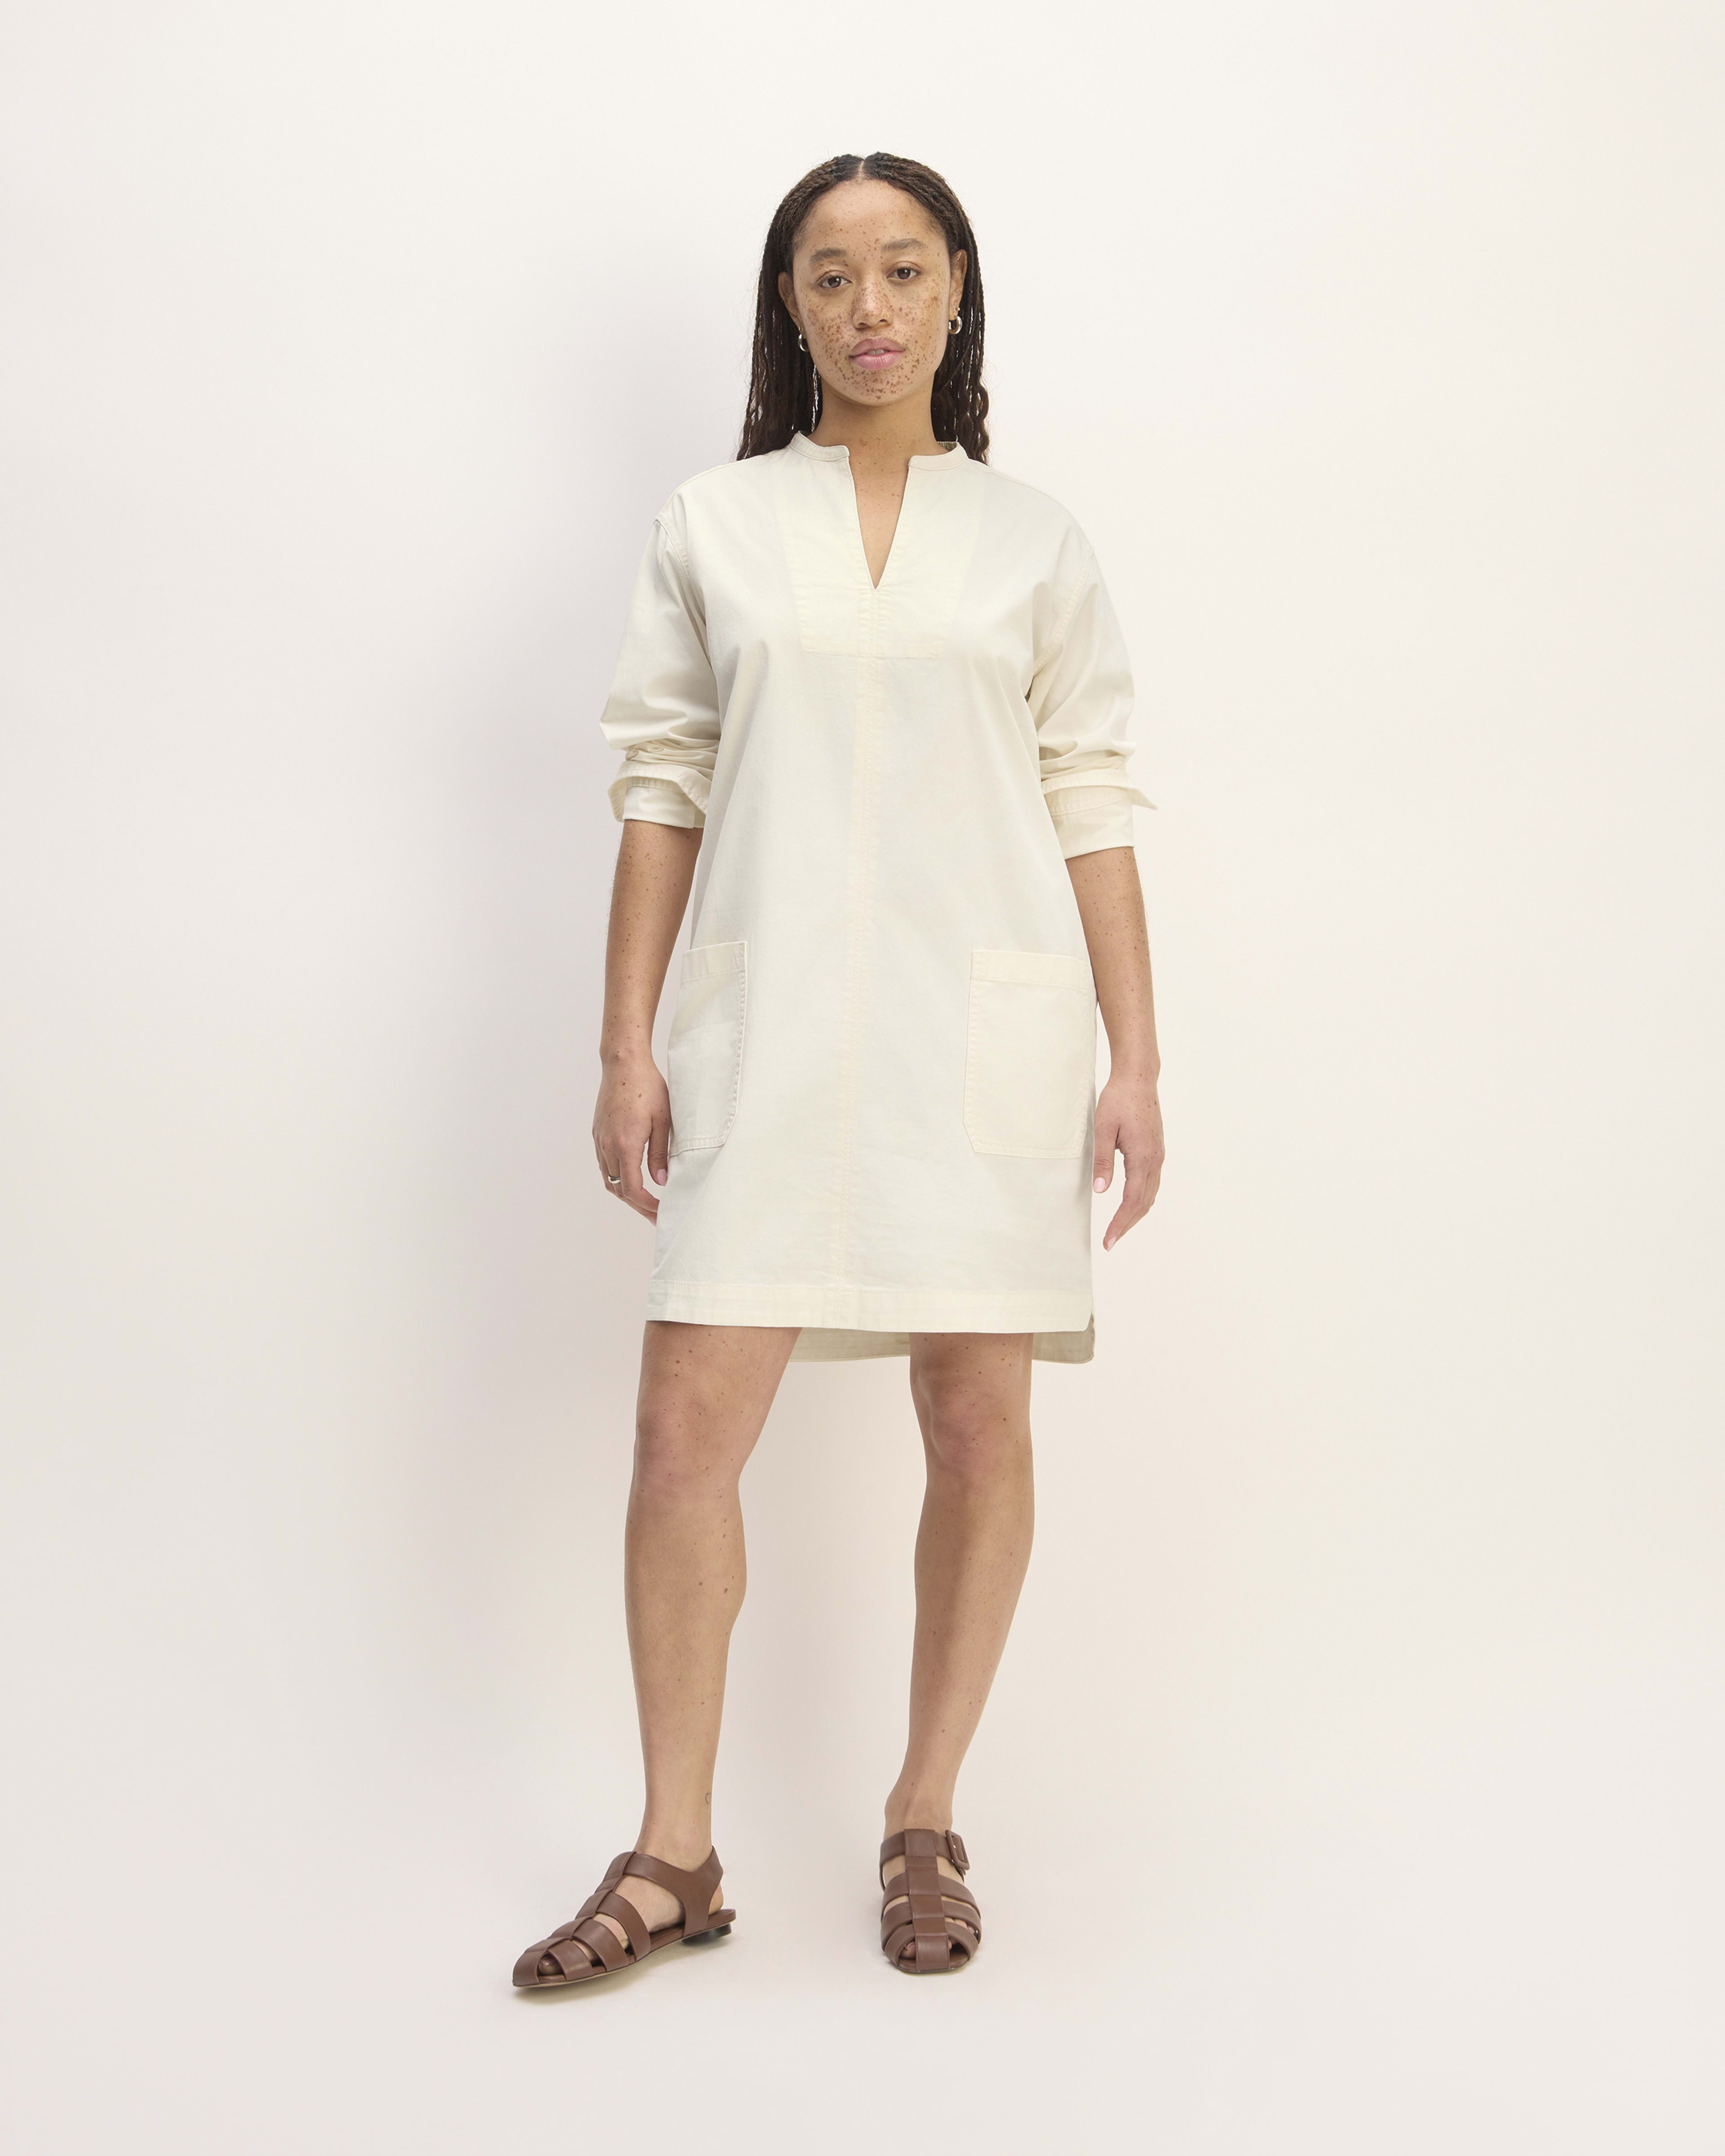 Women's Midi & Maxi Dresses  Dresses & Jumpsuits – Everlane